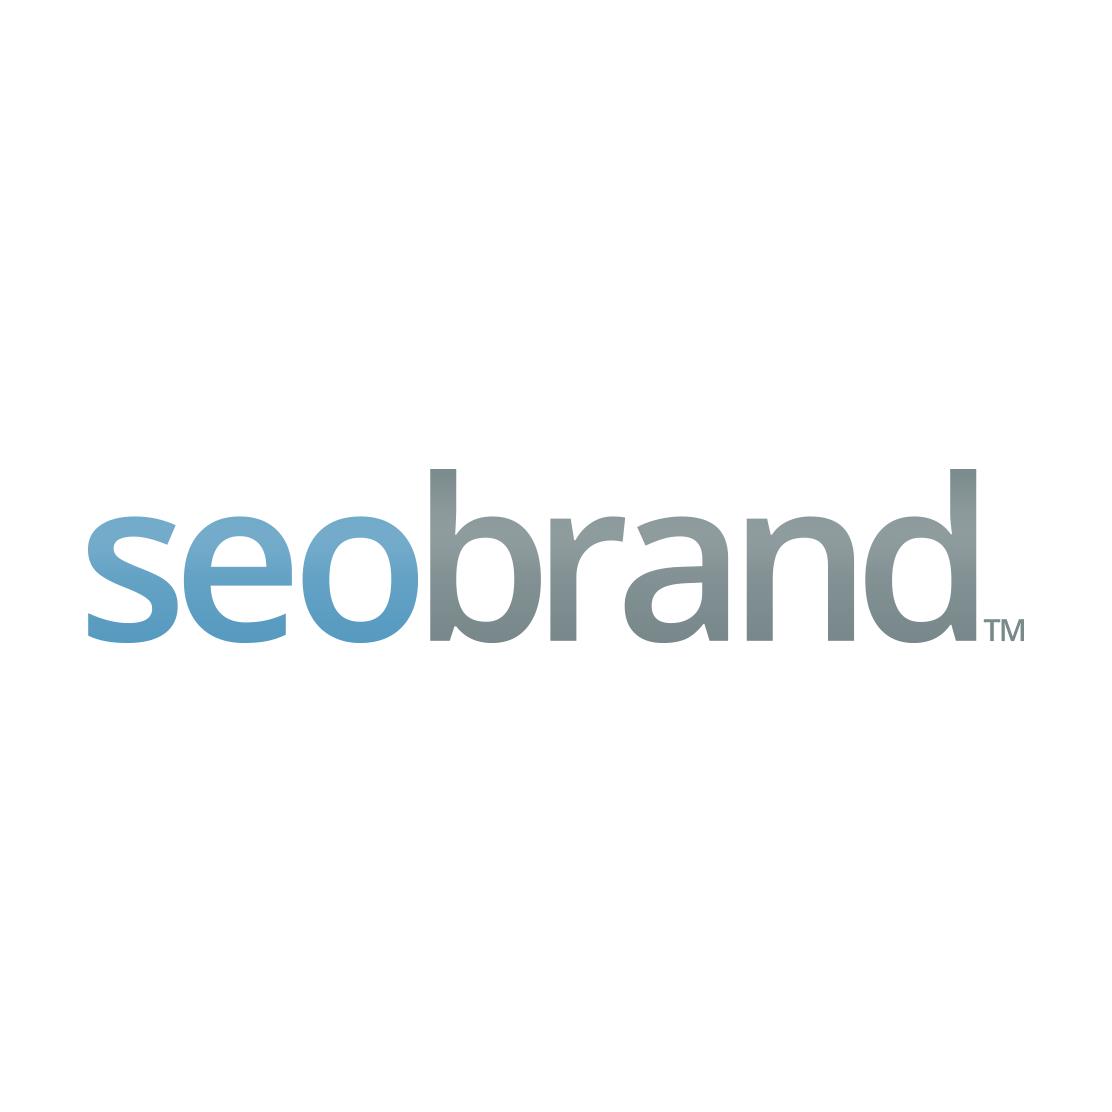 Top Philadelphia SEO Business Logo: SEO Brand